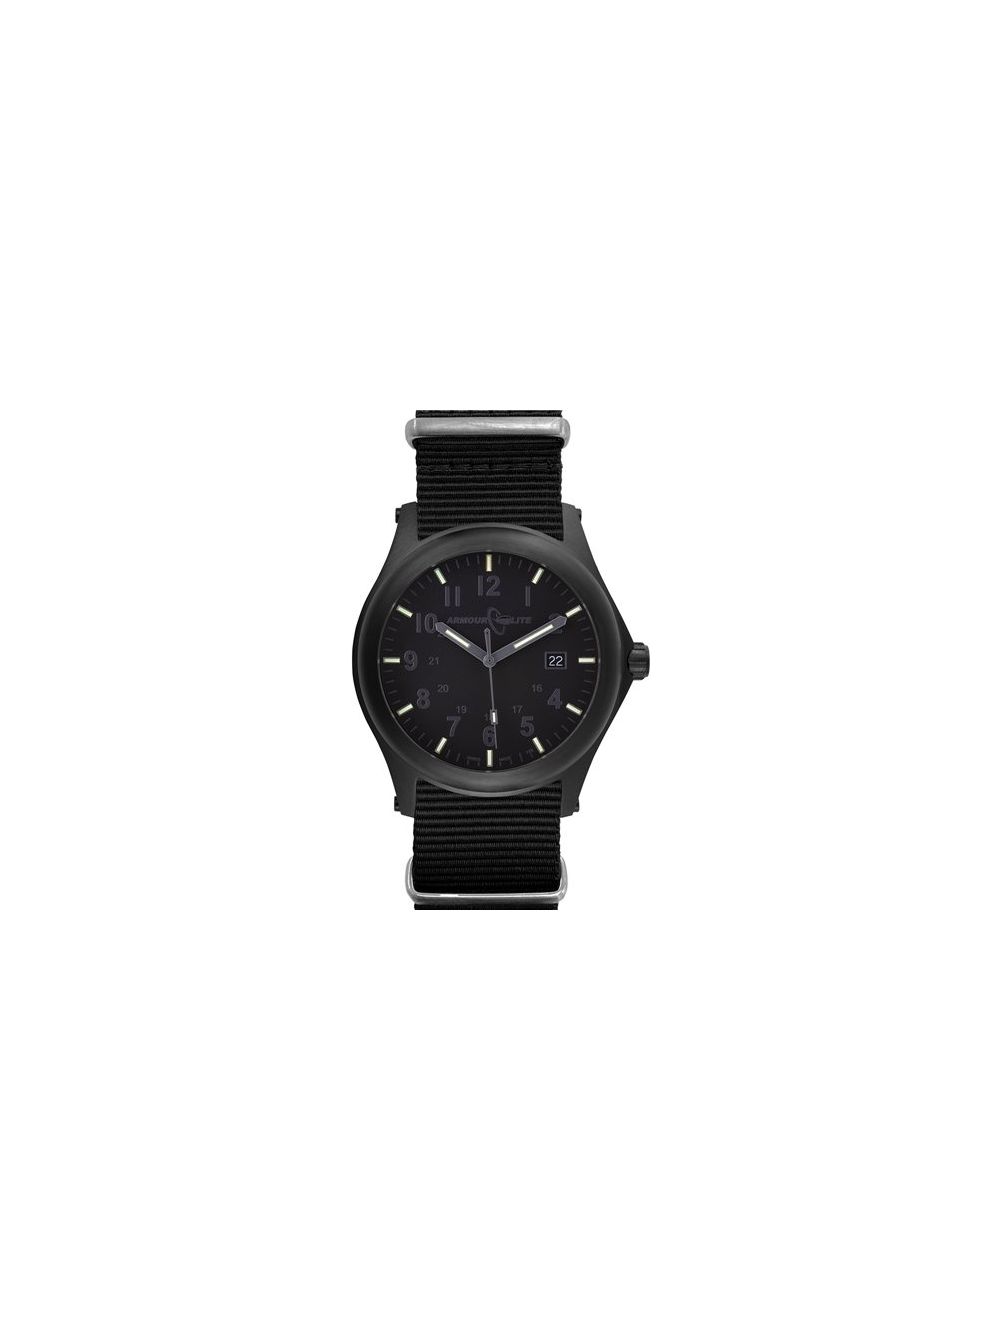 ArmourLite Stealth Black Swiss Tritium Illuminated Watch